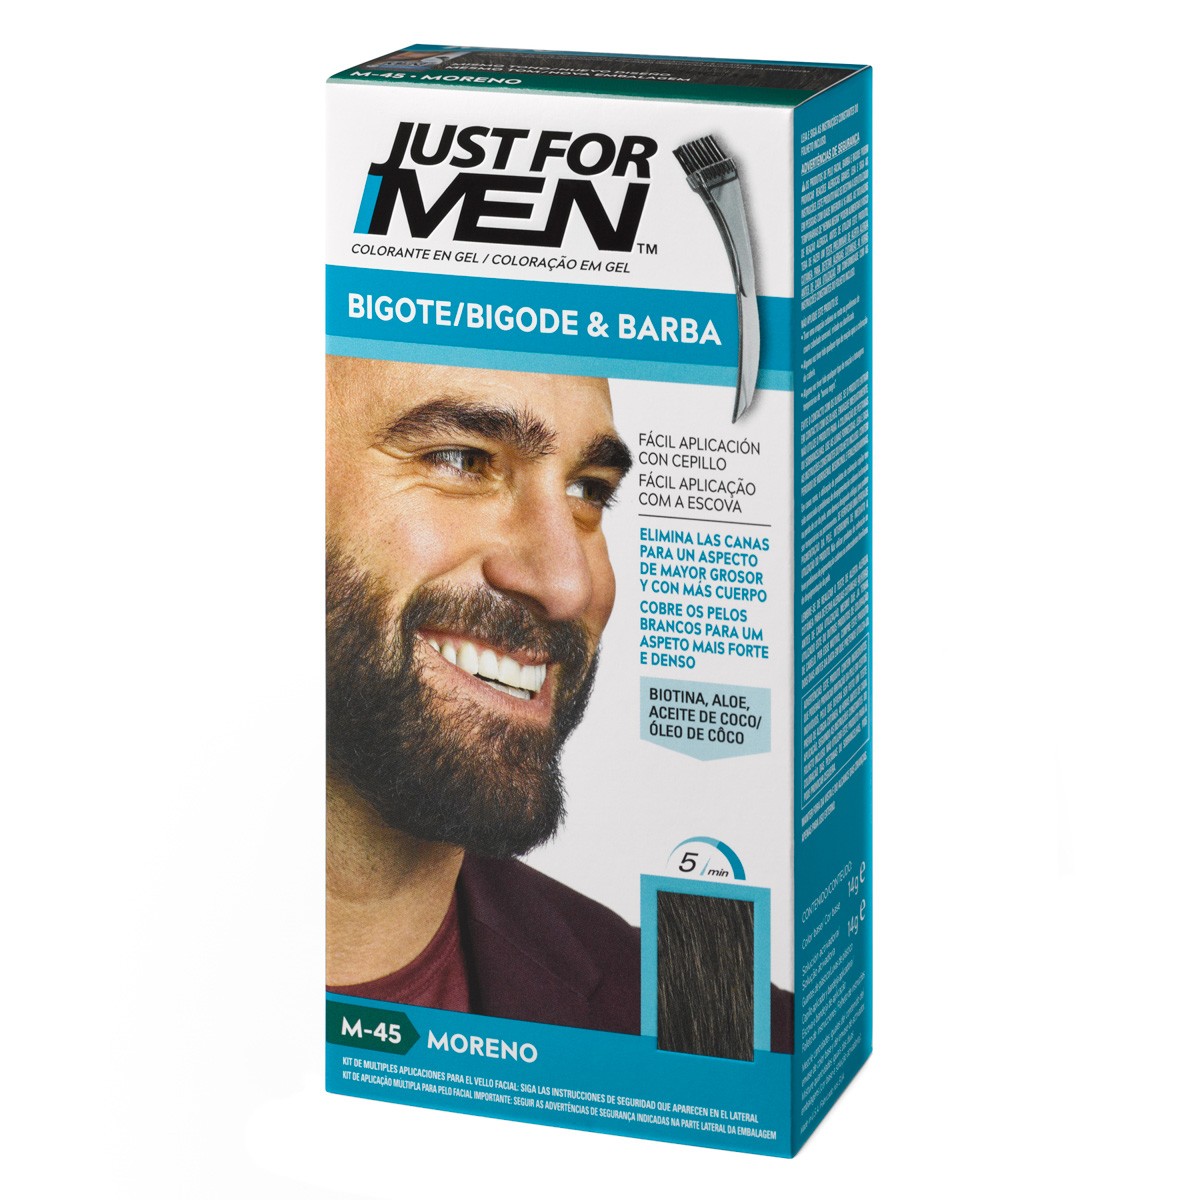 Just for men barba bigote moreno